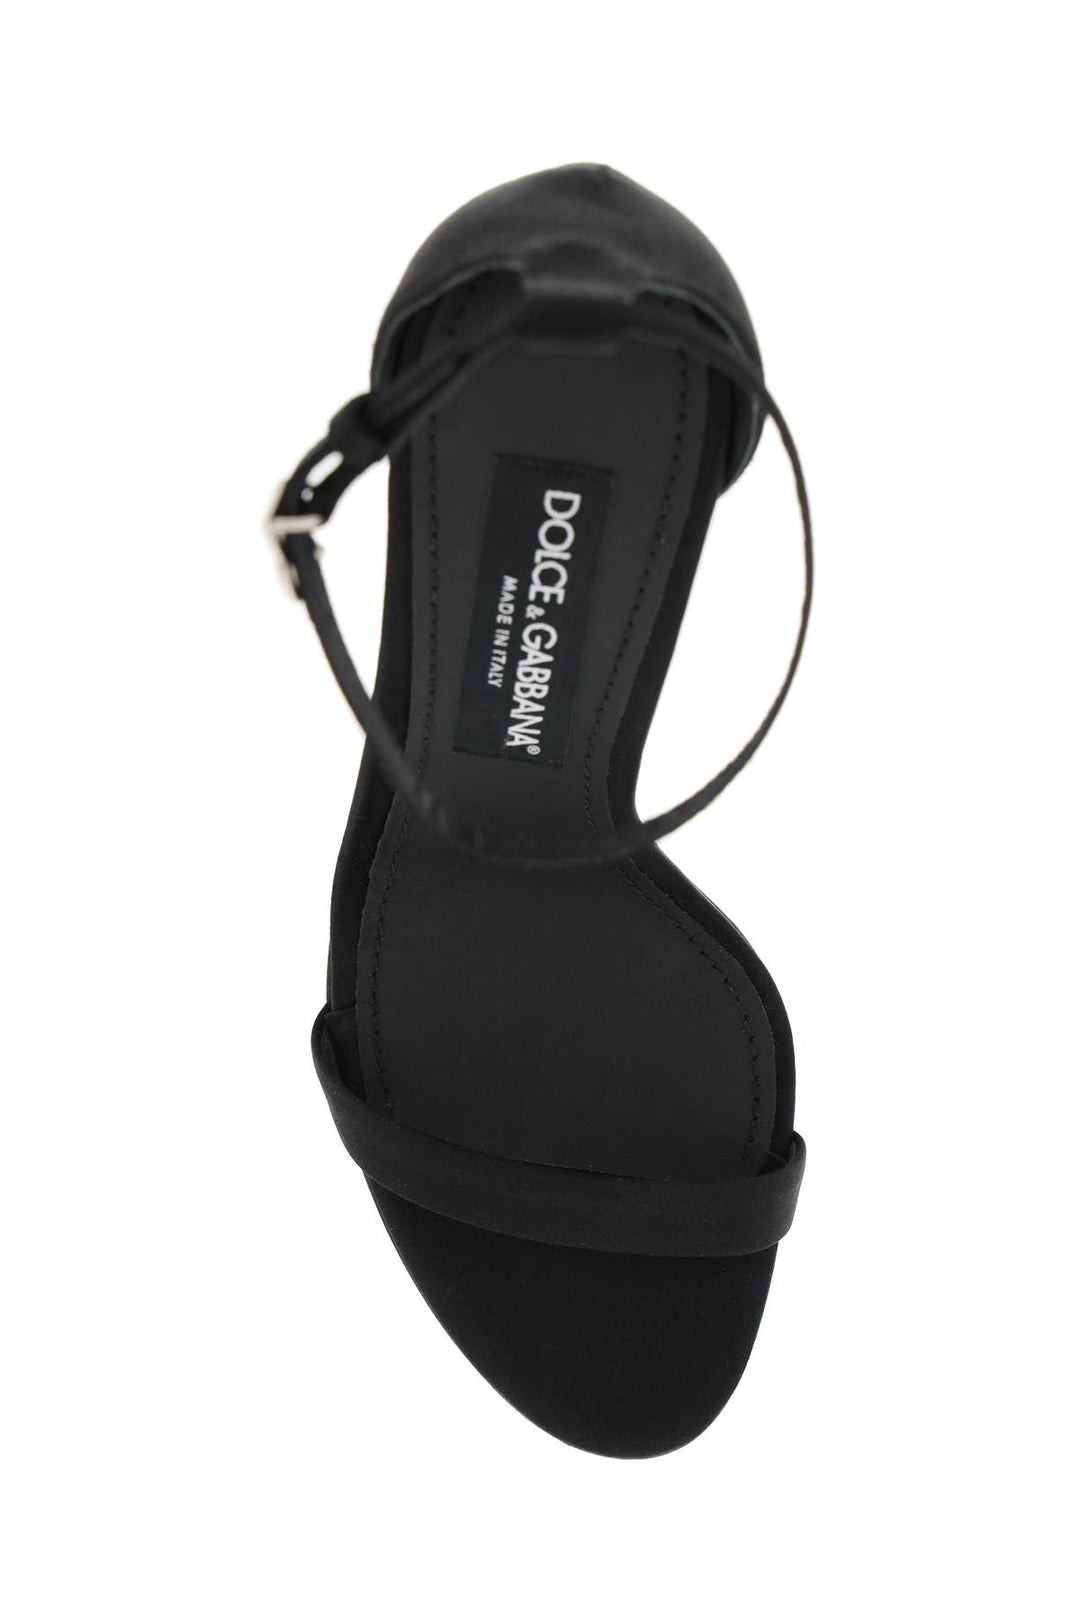 Dolce & Gabbana Satin Sandals For Elegant   Nero